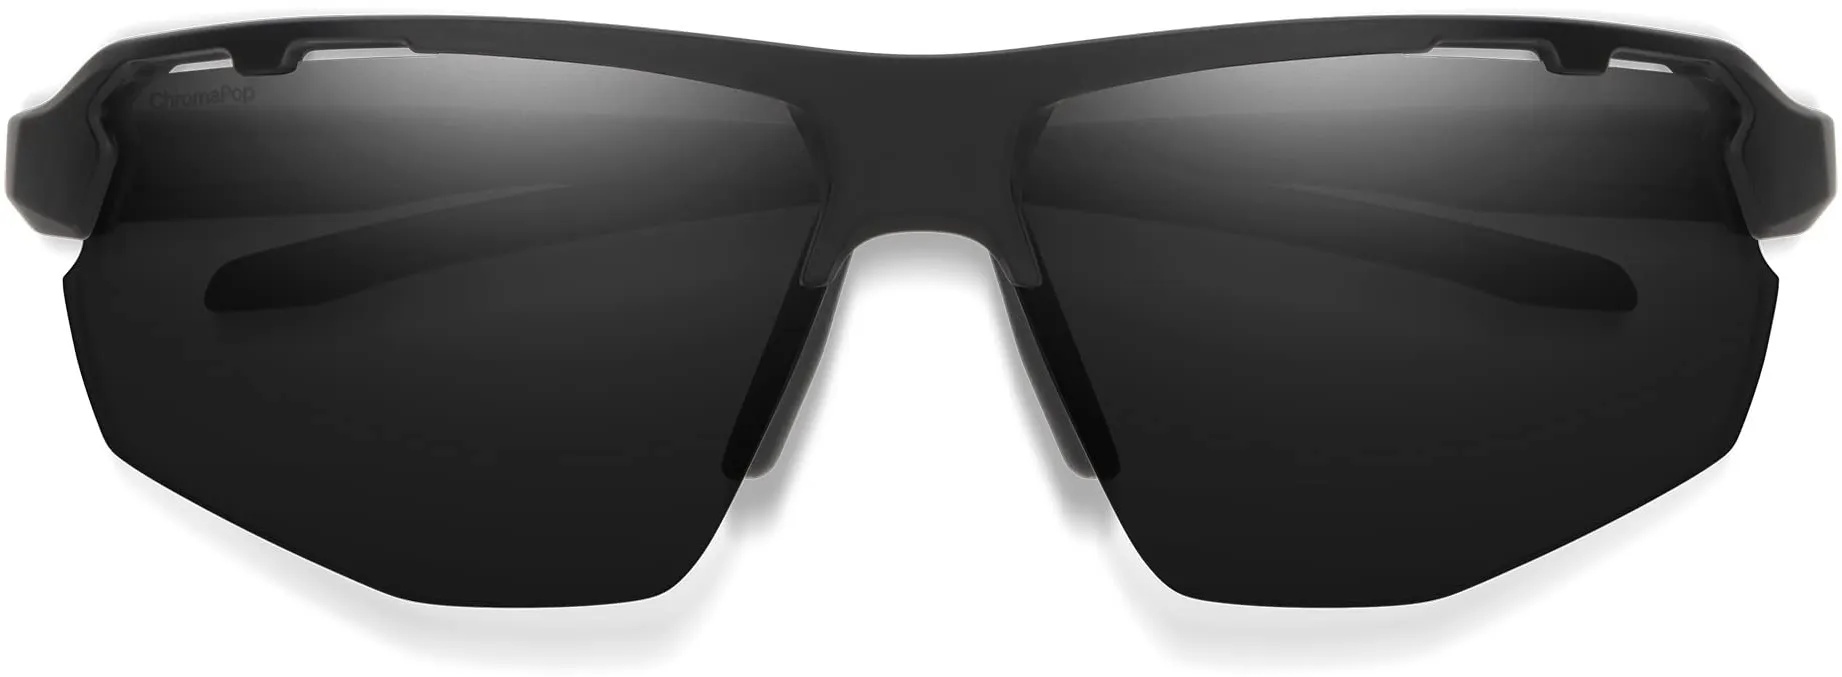 Smith Sunglasses Resolve Matte Black Black ChromapopTM Black